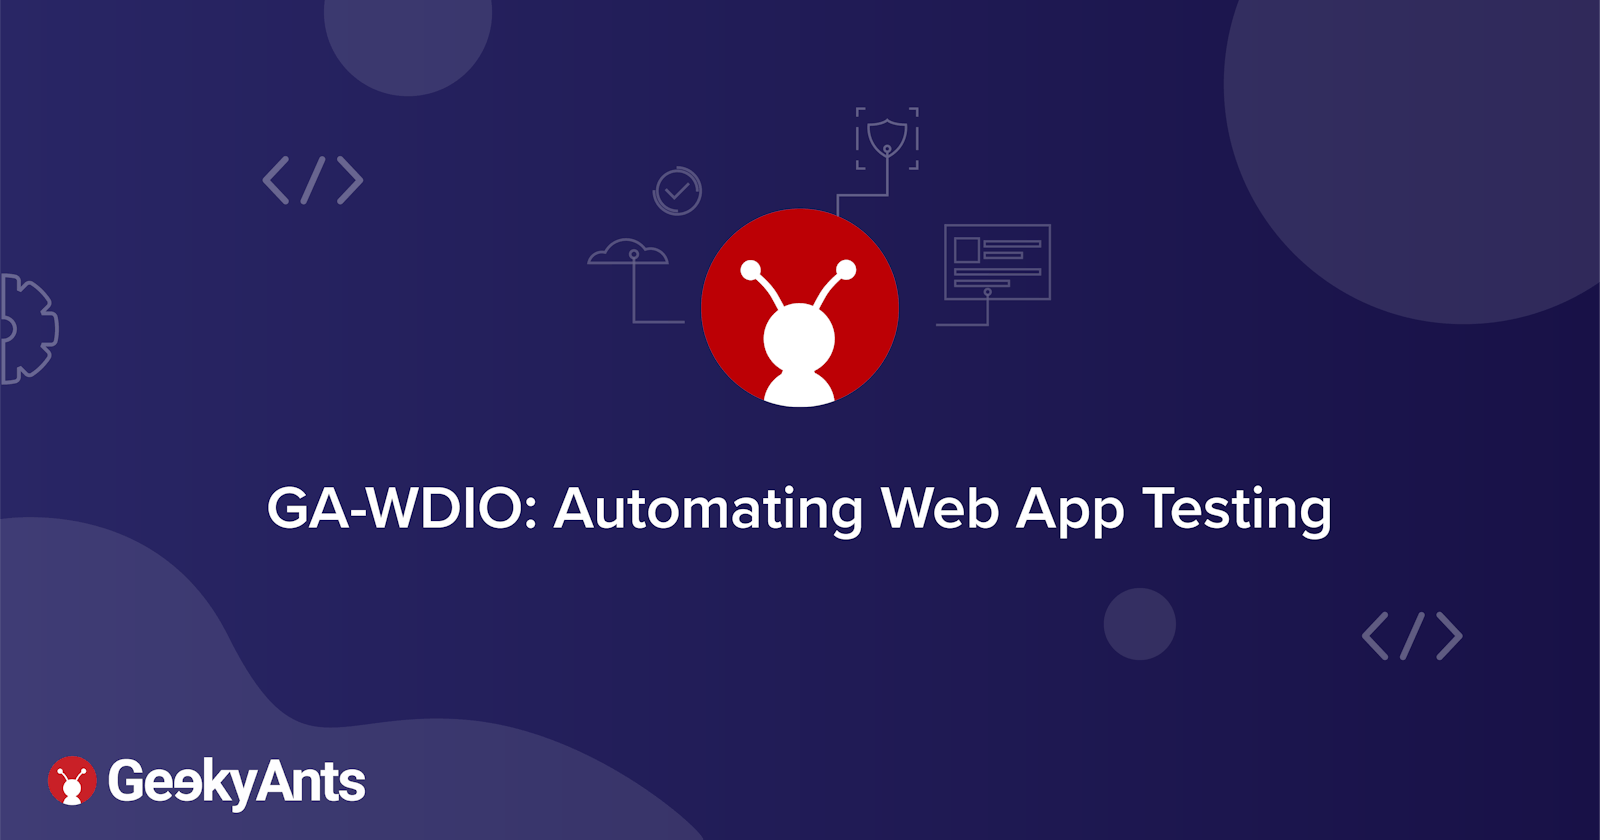 GA-WDIO: Automating Web App Testing